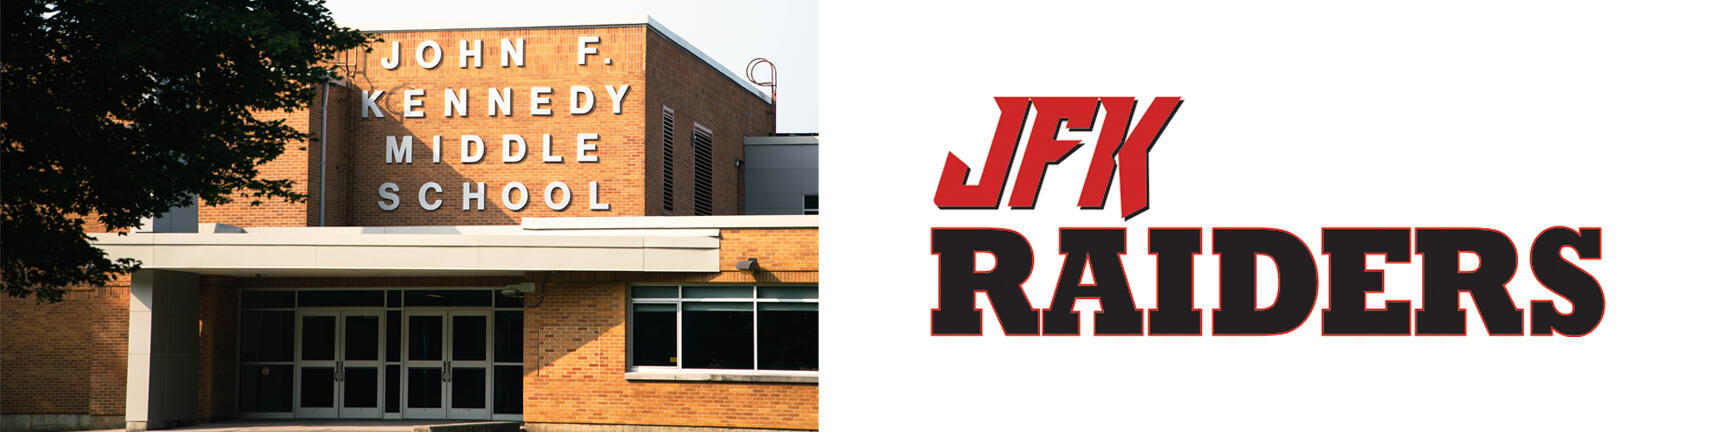 Изображение здания школы JFK и логотипа JFK Raiders